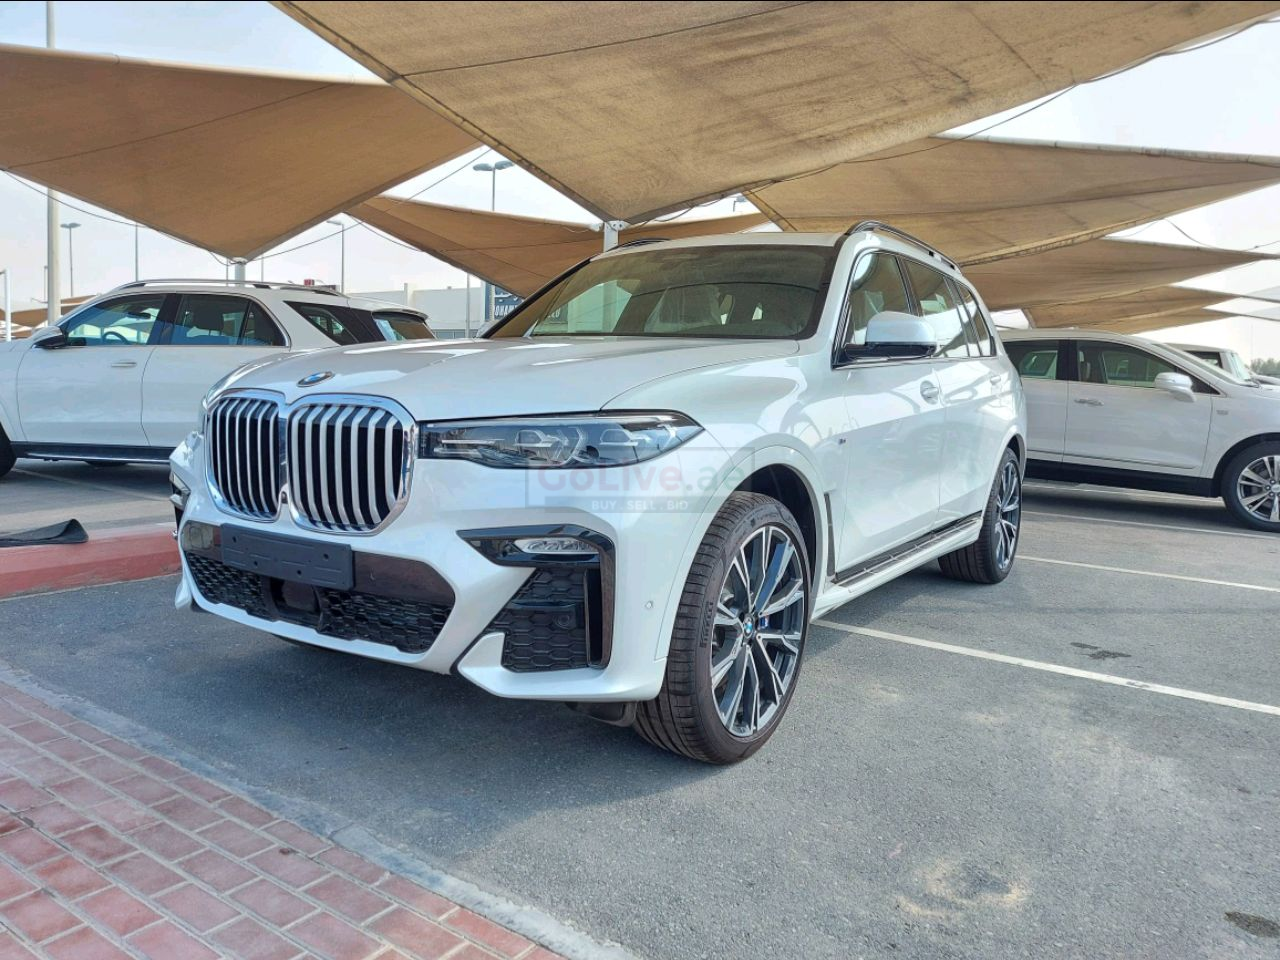 BMW X7 2019 for sale